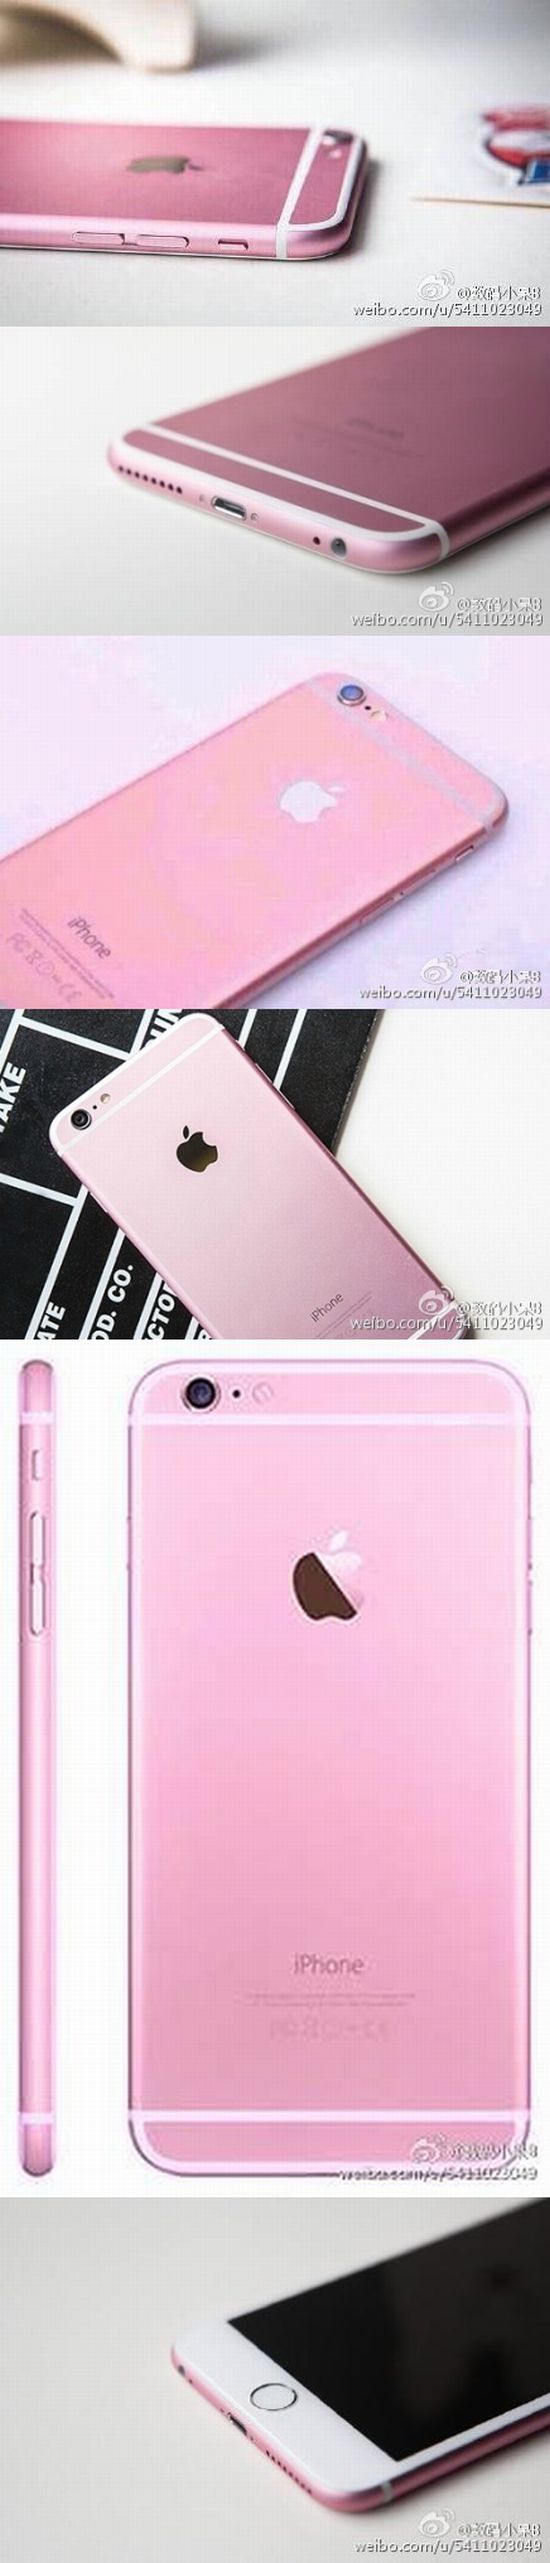 Pink iPhone. Kéne?